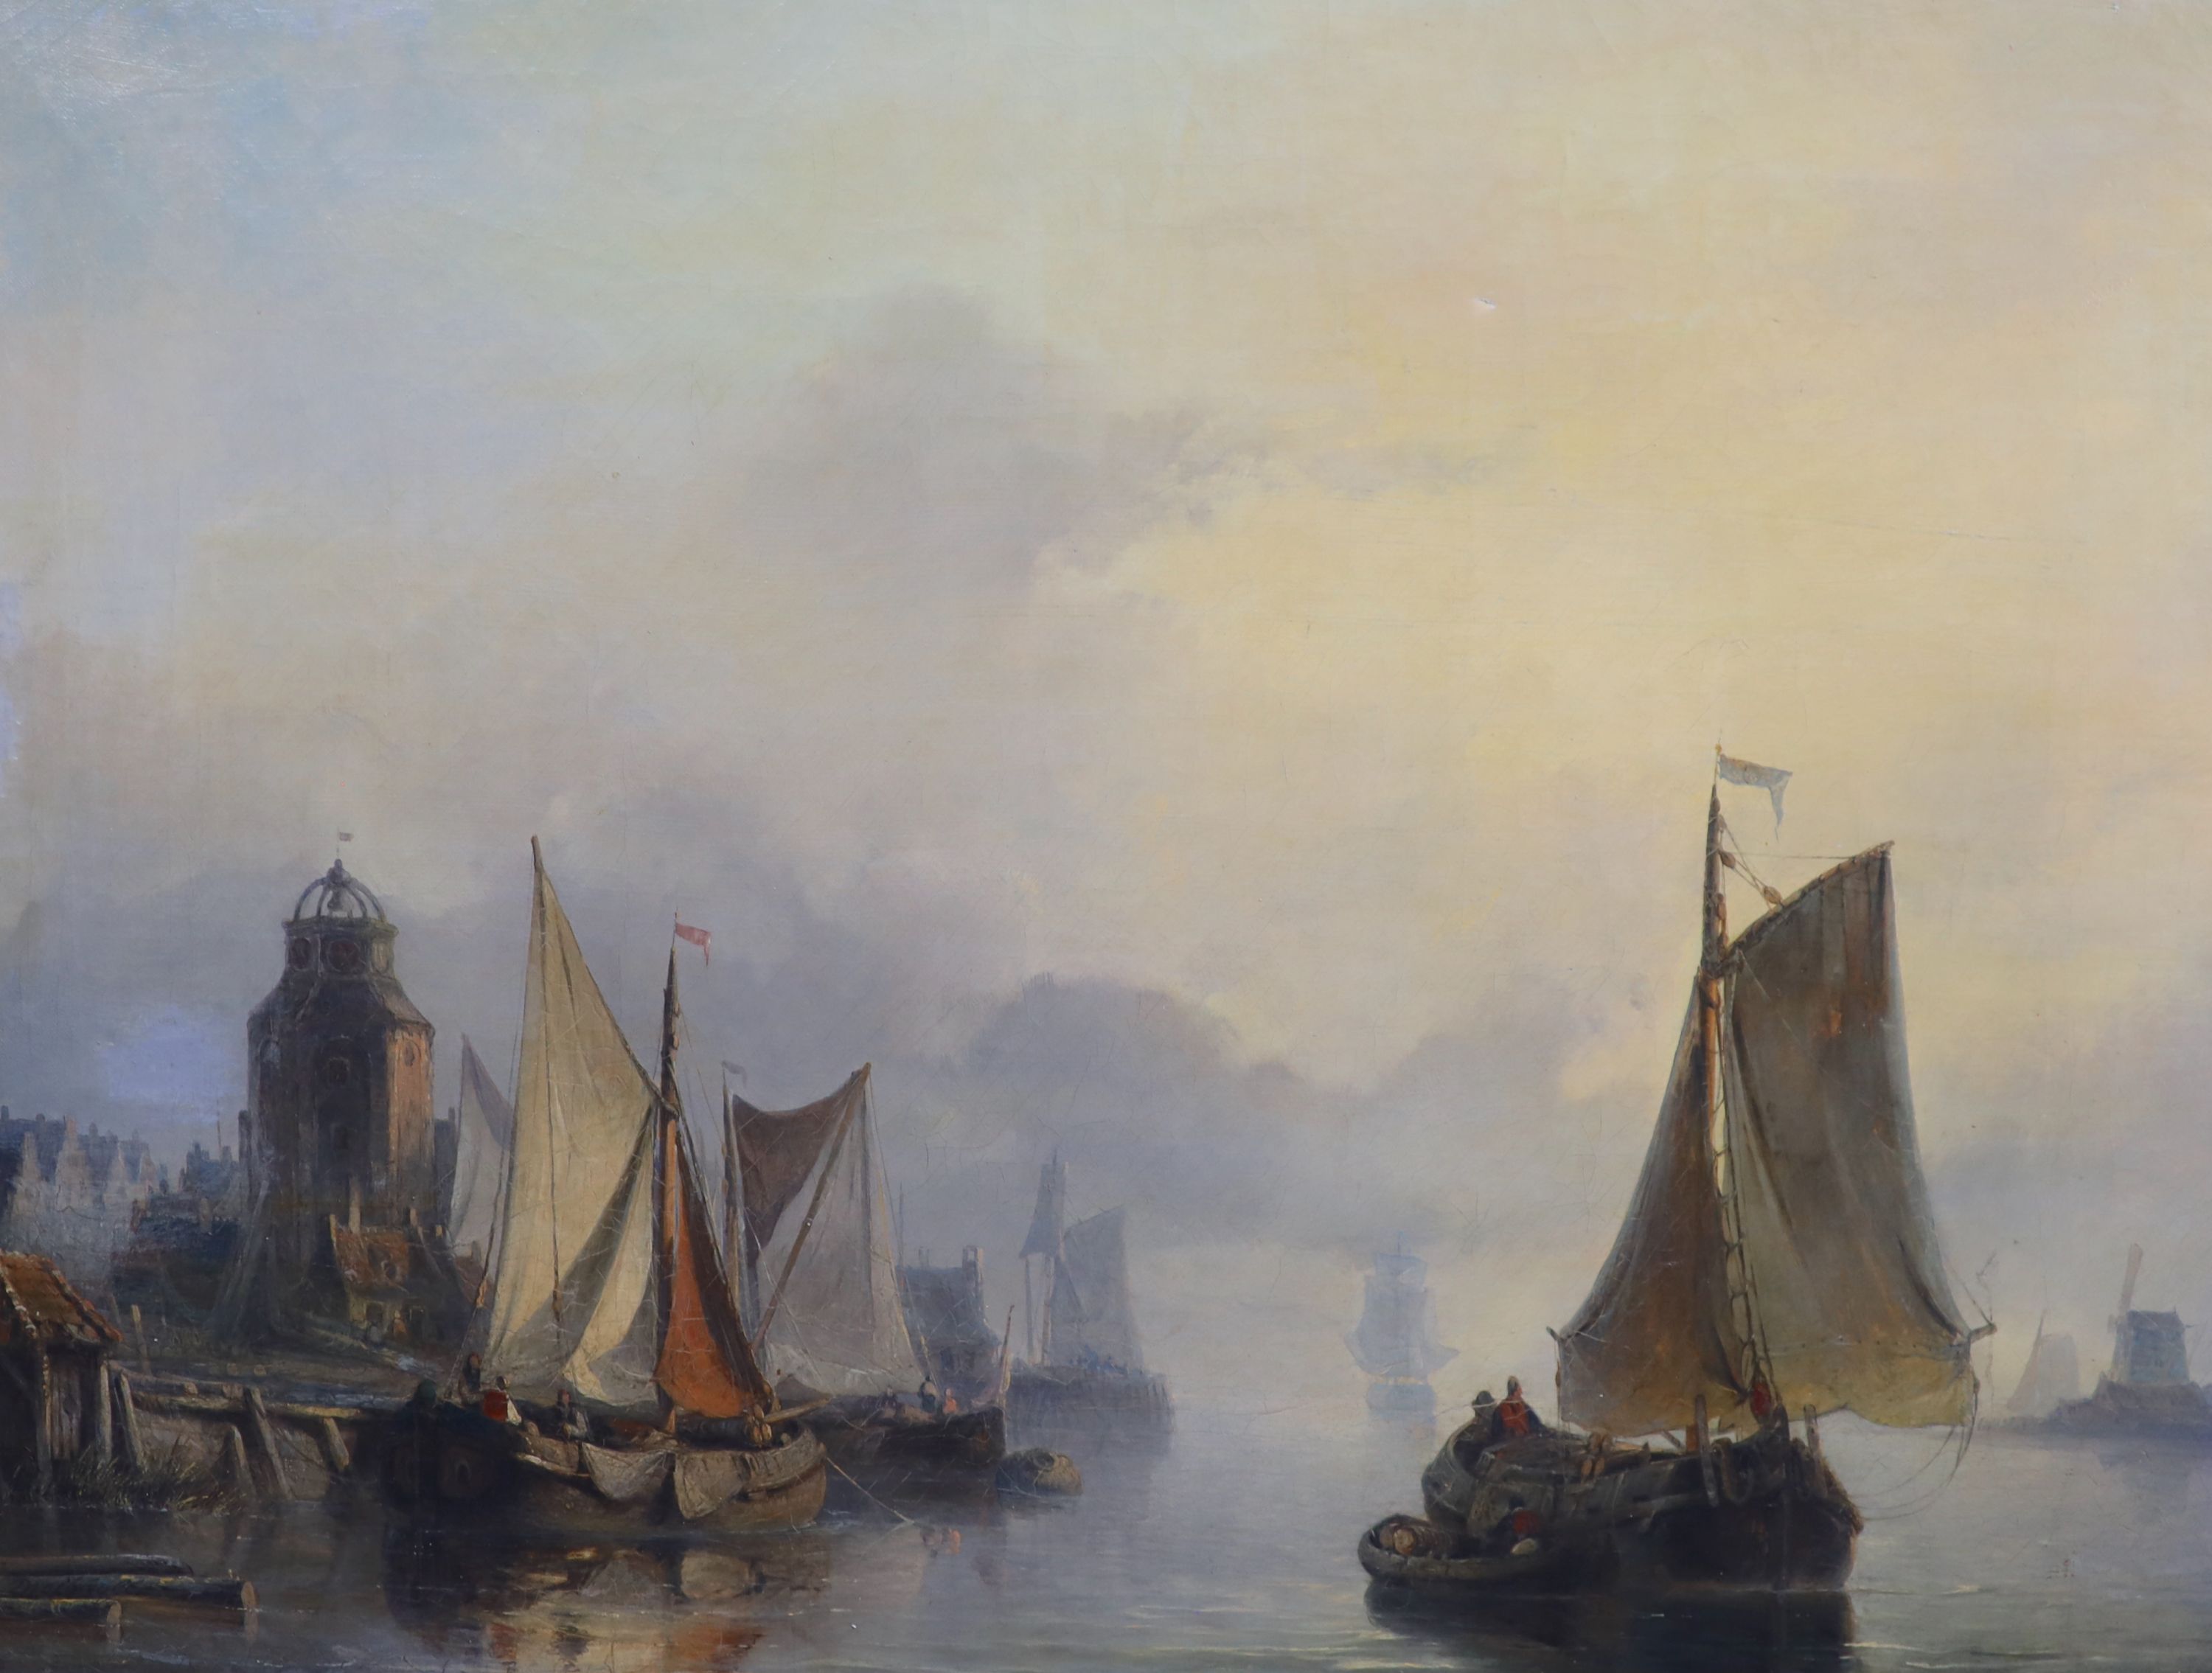 Christiaan Lodewijk Willem Dreibholtz (1799-1874), Shipping in harbour, oil on canvas, 53 x 70cm